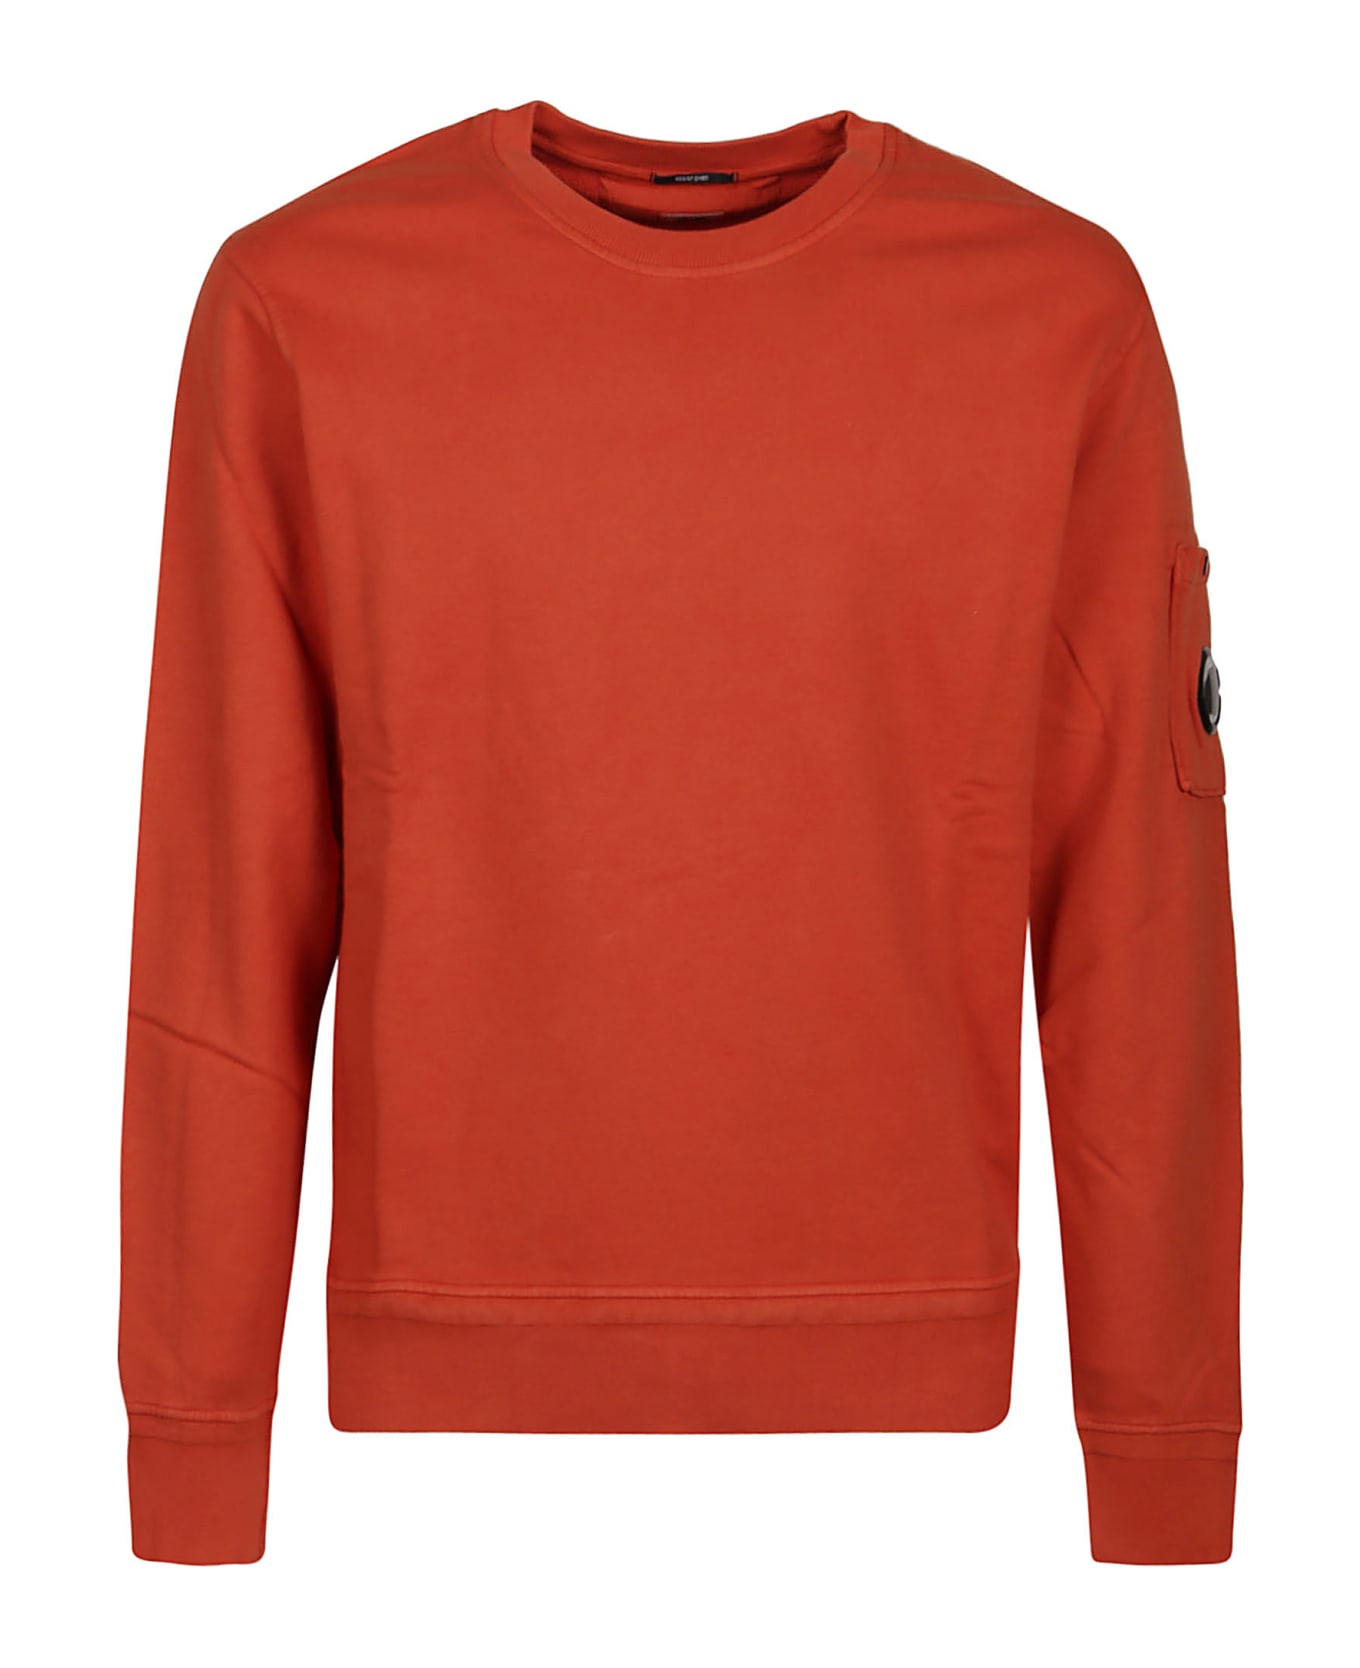 C.P. Company Cotton Fleece Resist Dyed Sweatshirt - Harvest Pumpkin